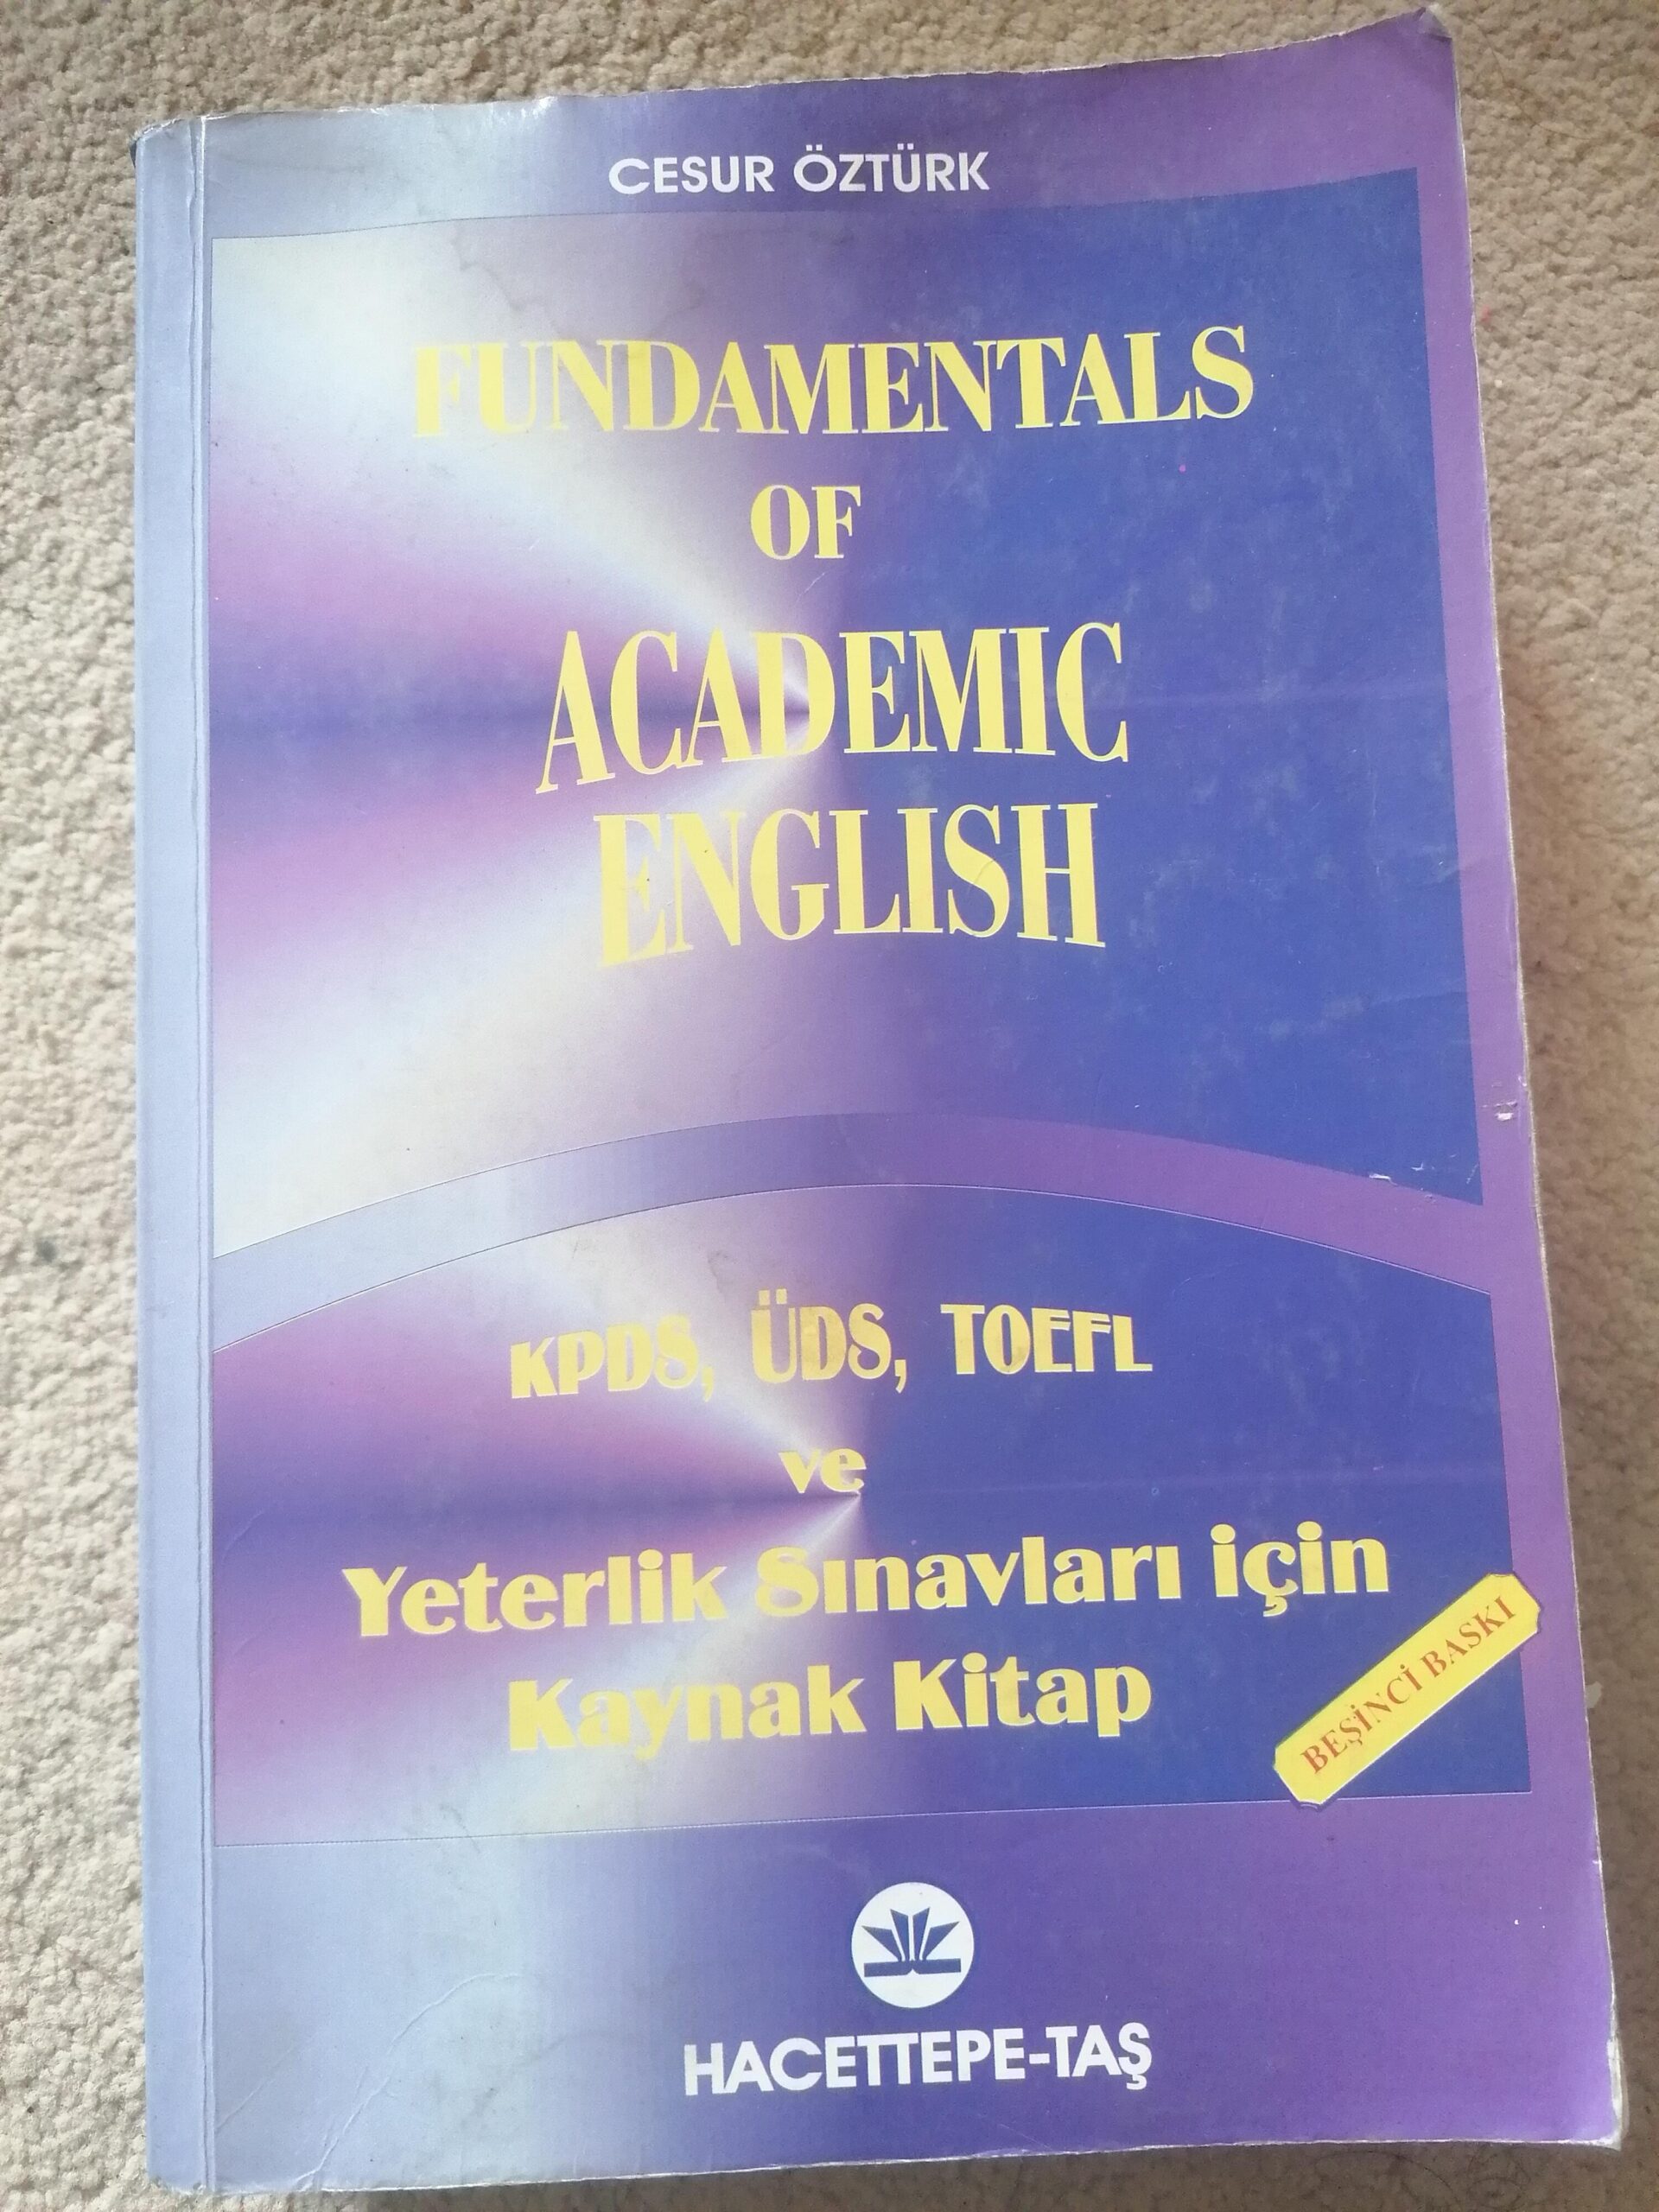 KPDS ÜDS TOEFL test kitabı